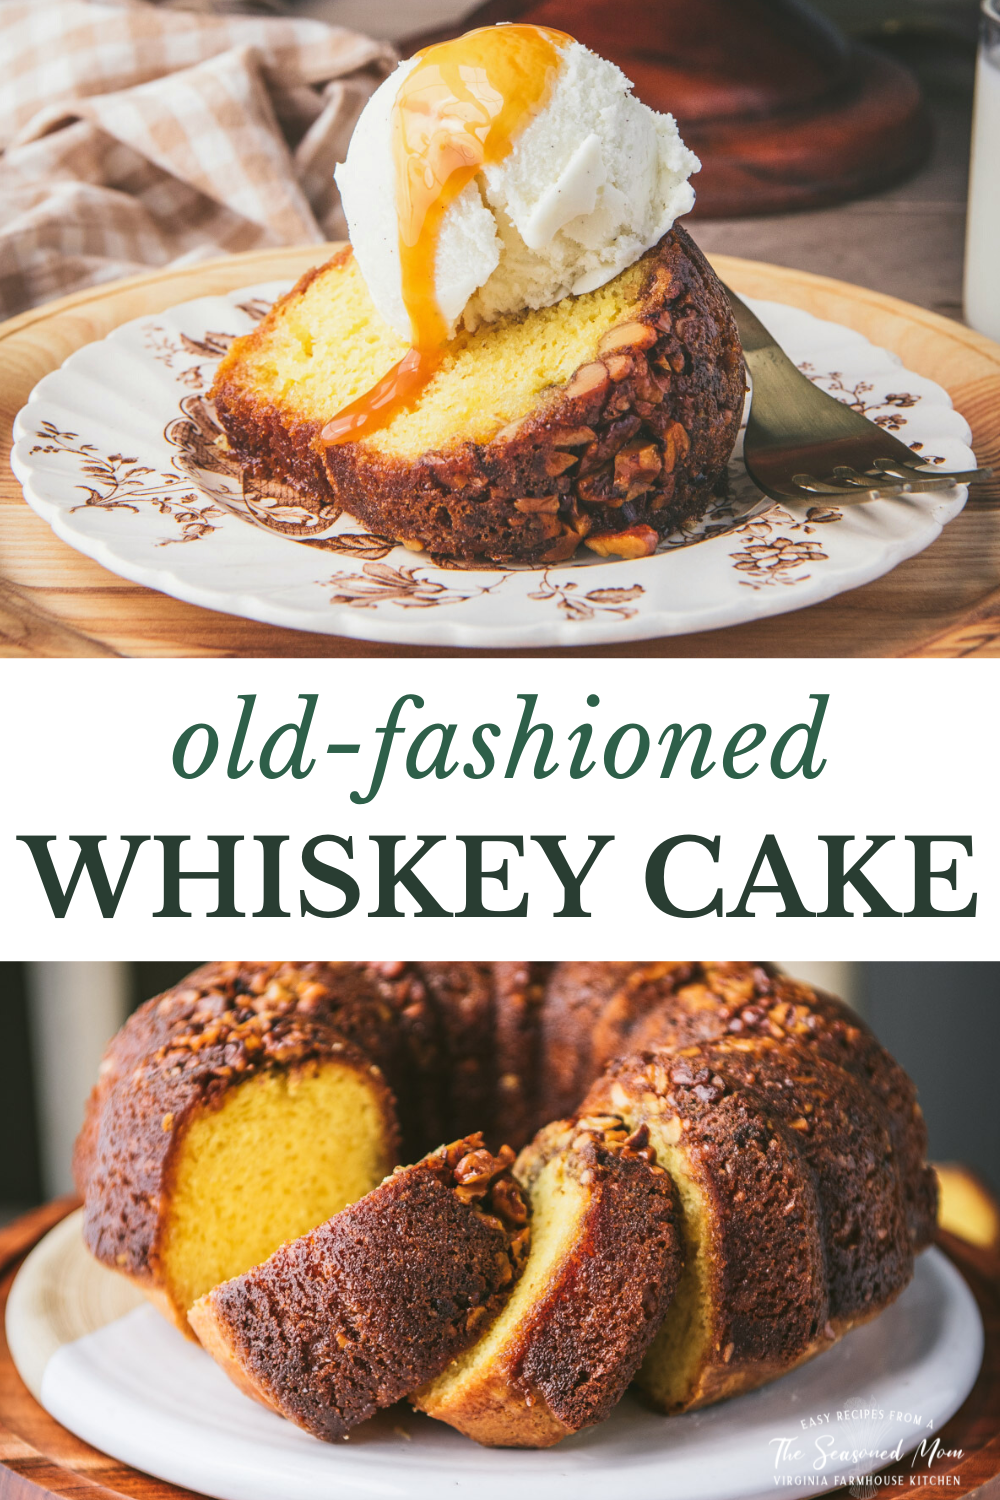 Grandma's Old Fashioned Whiskey Cake Recipe - The Seasoned Mom